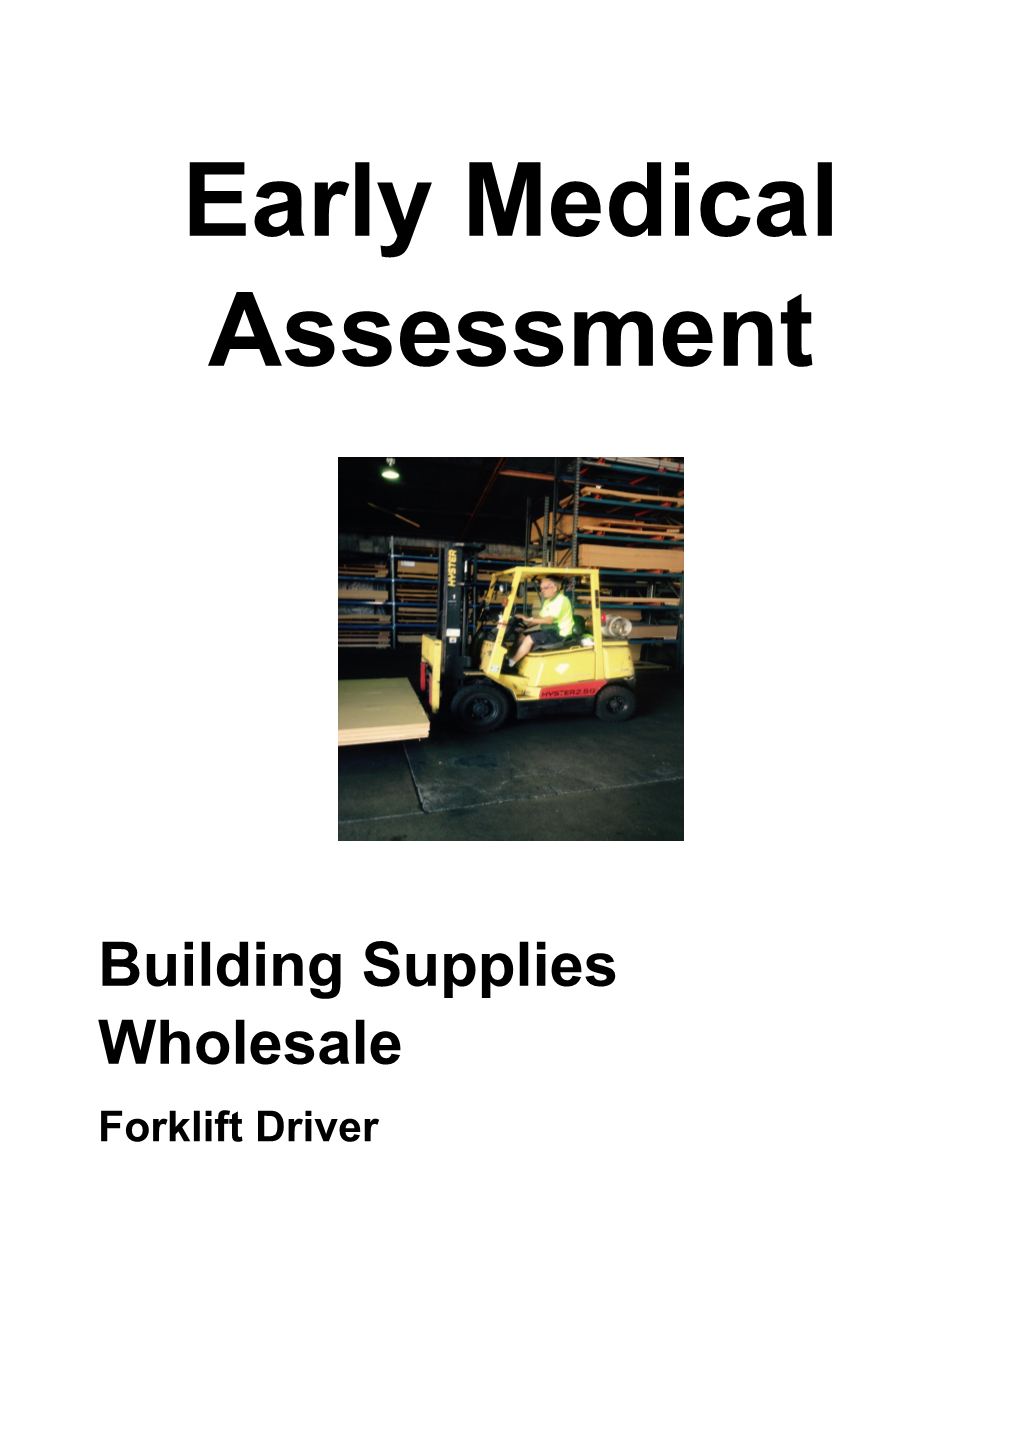 Building Supplies Wholesale - Forklift Driver